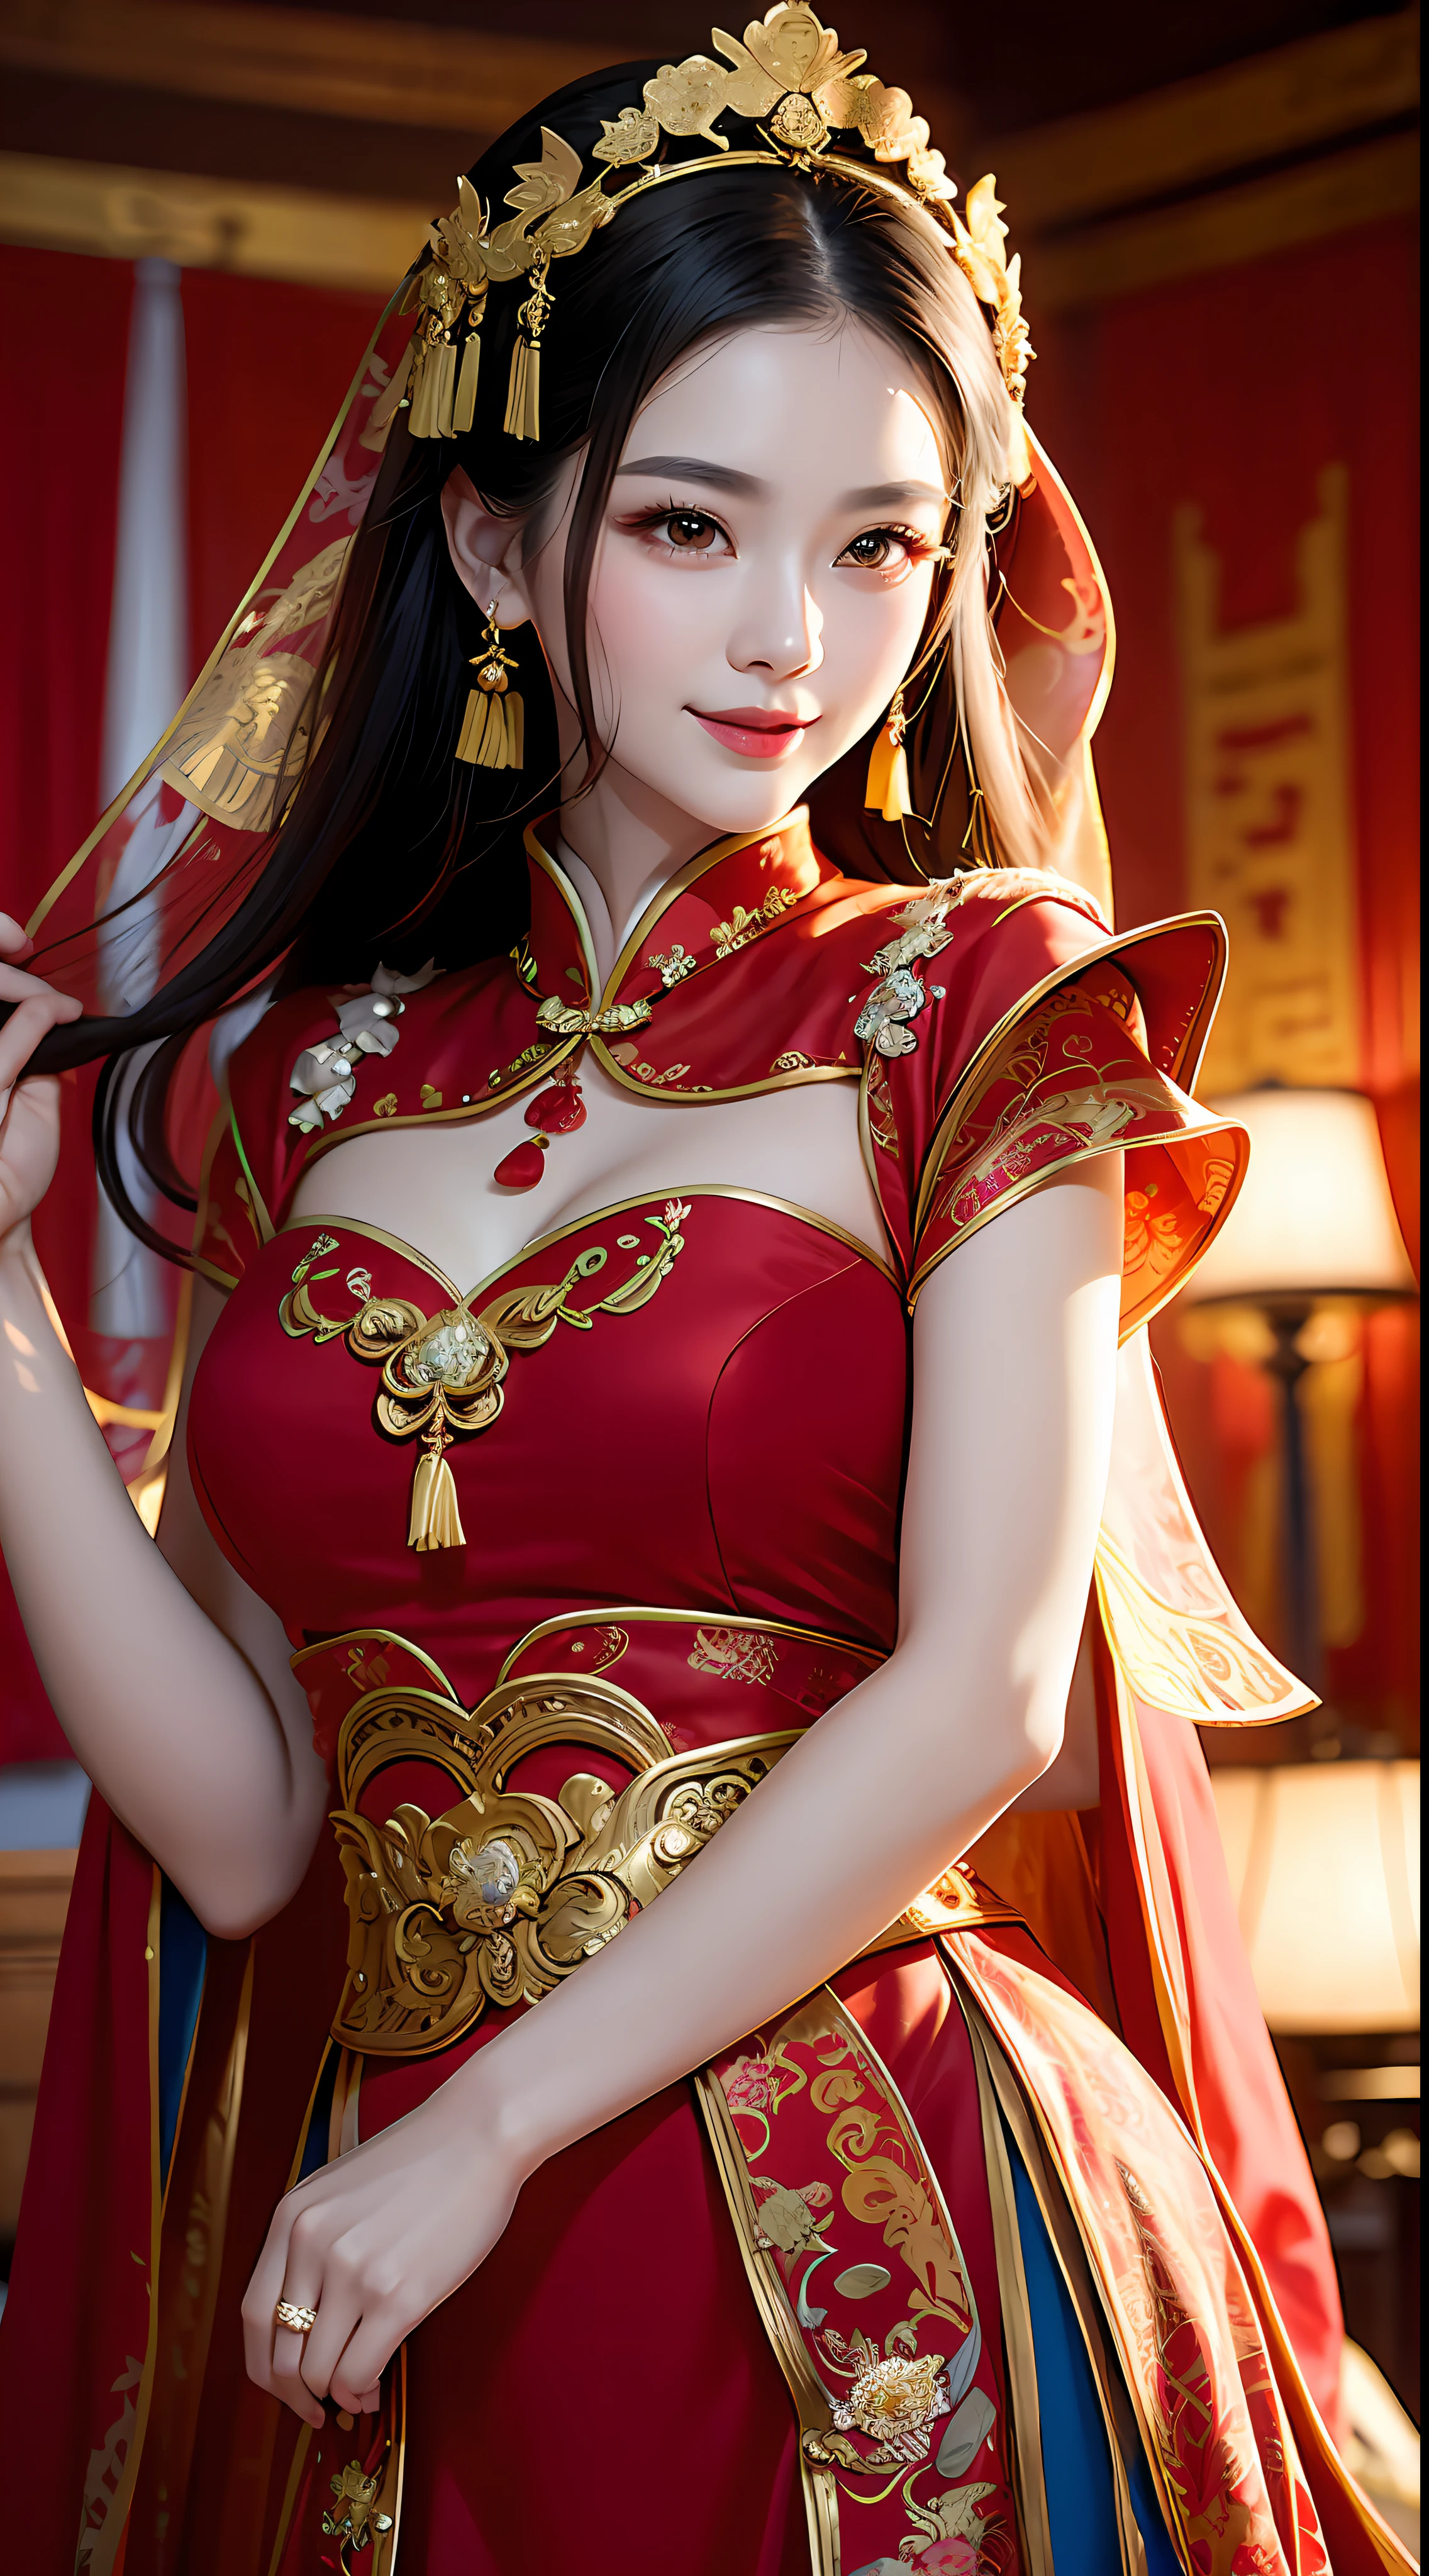 (8K, 原始照片, 最好的品質, 傑作: 1.2), (實際的, 實際的: 1.37), 1 名女孩, 身穿紅色洋裝、頭戴頭飾的阿爾菲女子擺姿勢拍照, 華麗的角色扮演, 漂亮的服裝, 複雜的幻想禮服, 美麗的幻想女王, 旗袍, 複雜連身裙, 複雜的服裝, 传统美, 漂亮的中国模特, 中国服饰, 灵感来自兰英, 穿著華麗的服裝, 受到談話的啟發, 身著優雅的中式秀禾服, 中國婚紗, 鳳冠霞手, 古董新娘, 秀場禮服, 特寫, 特寫, 微笑